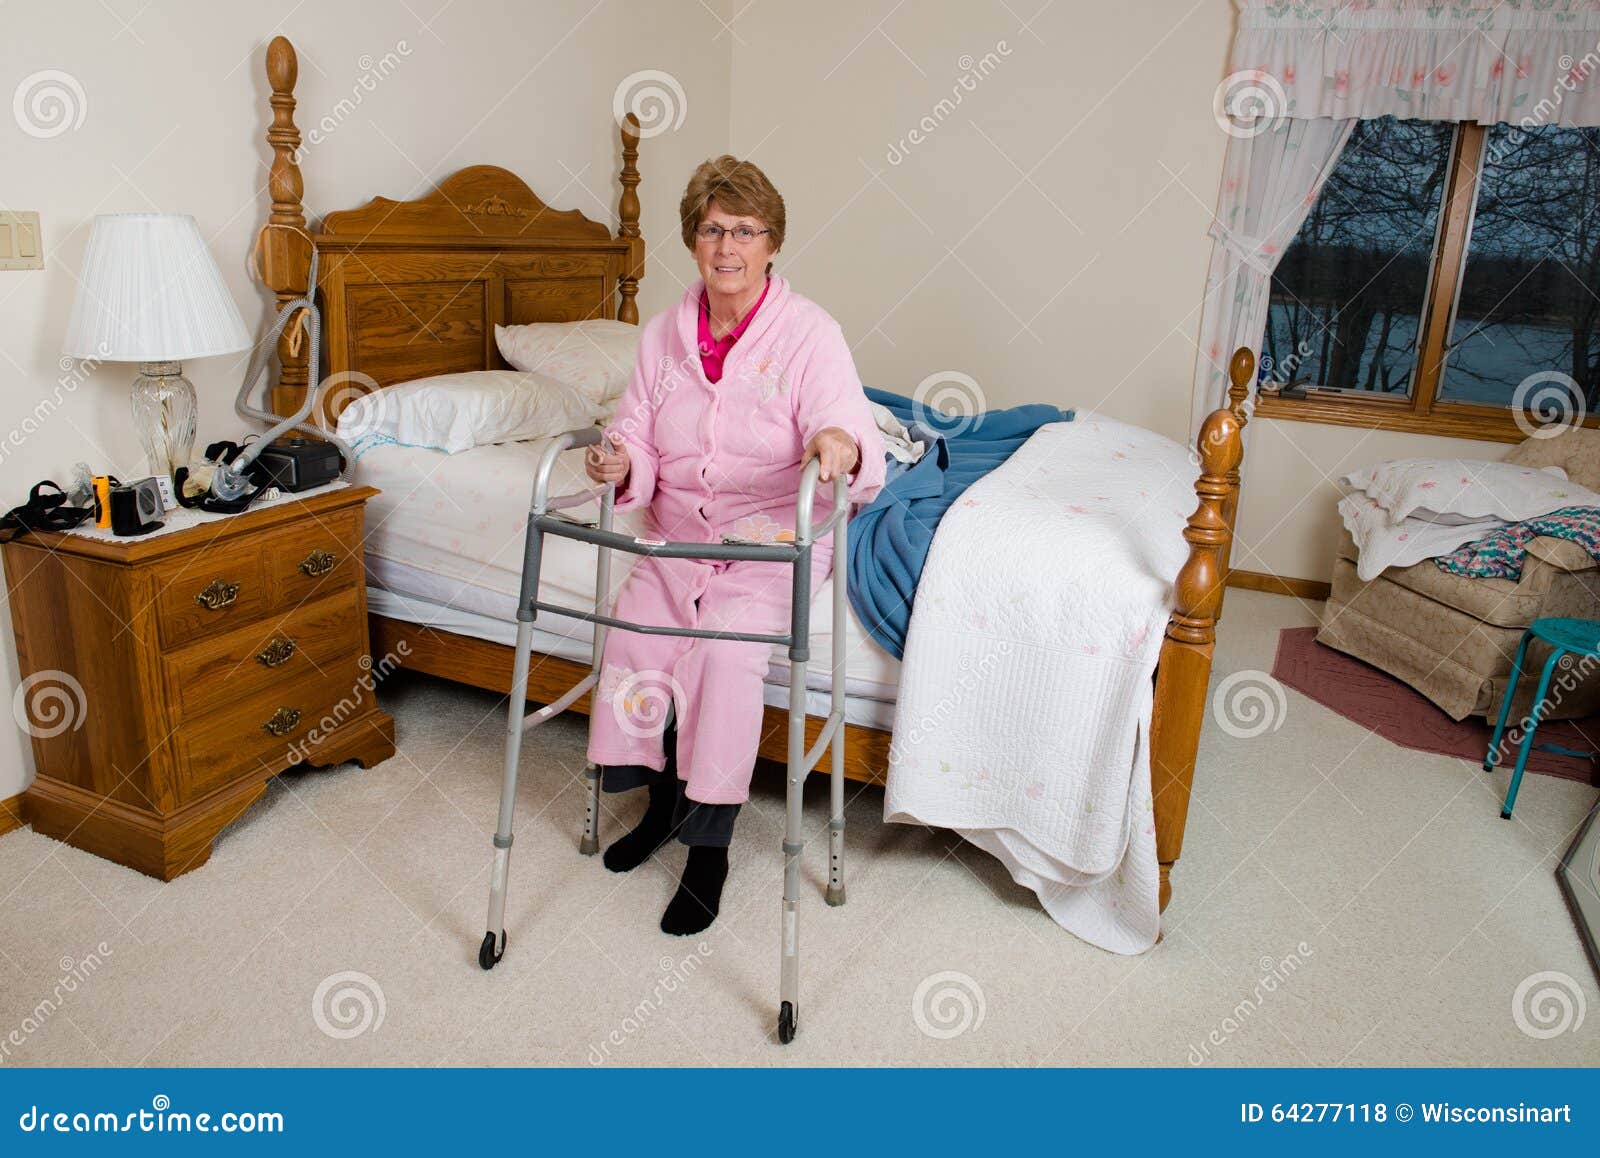 assisted living nursing home elderly woman